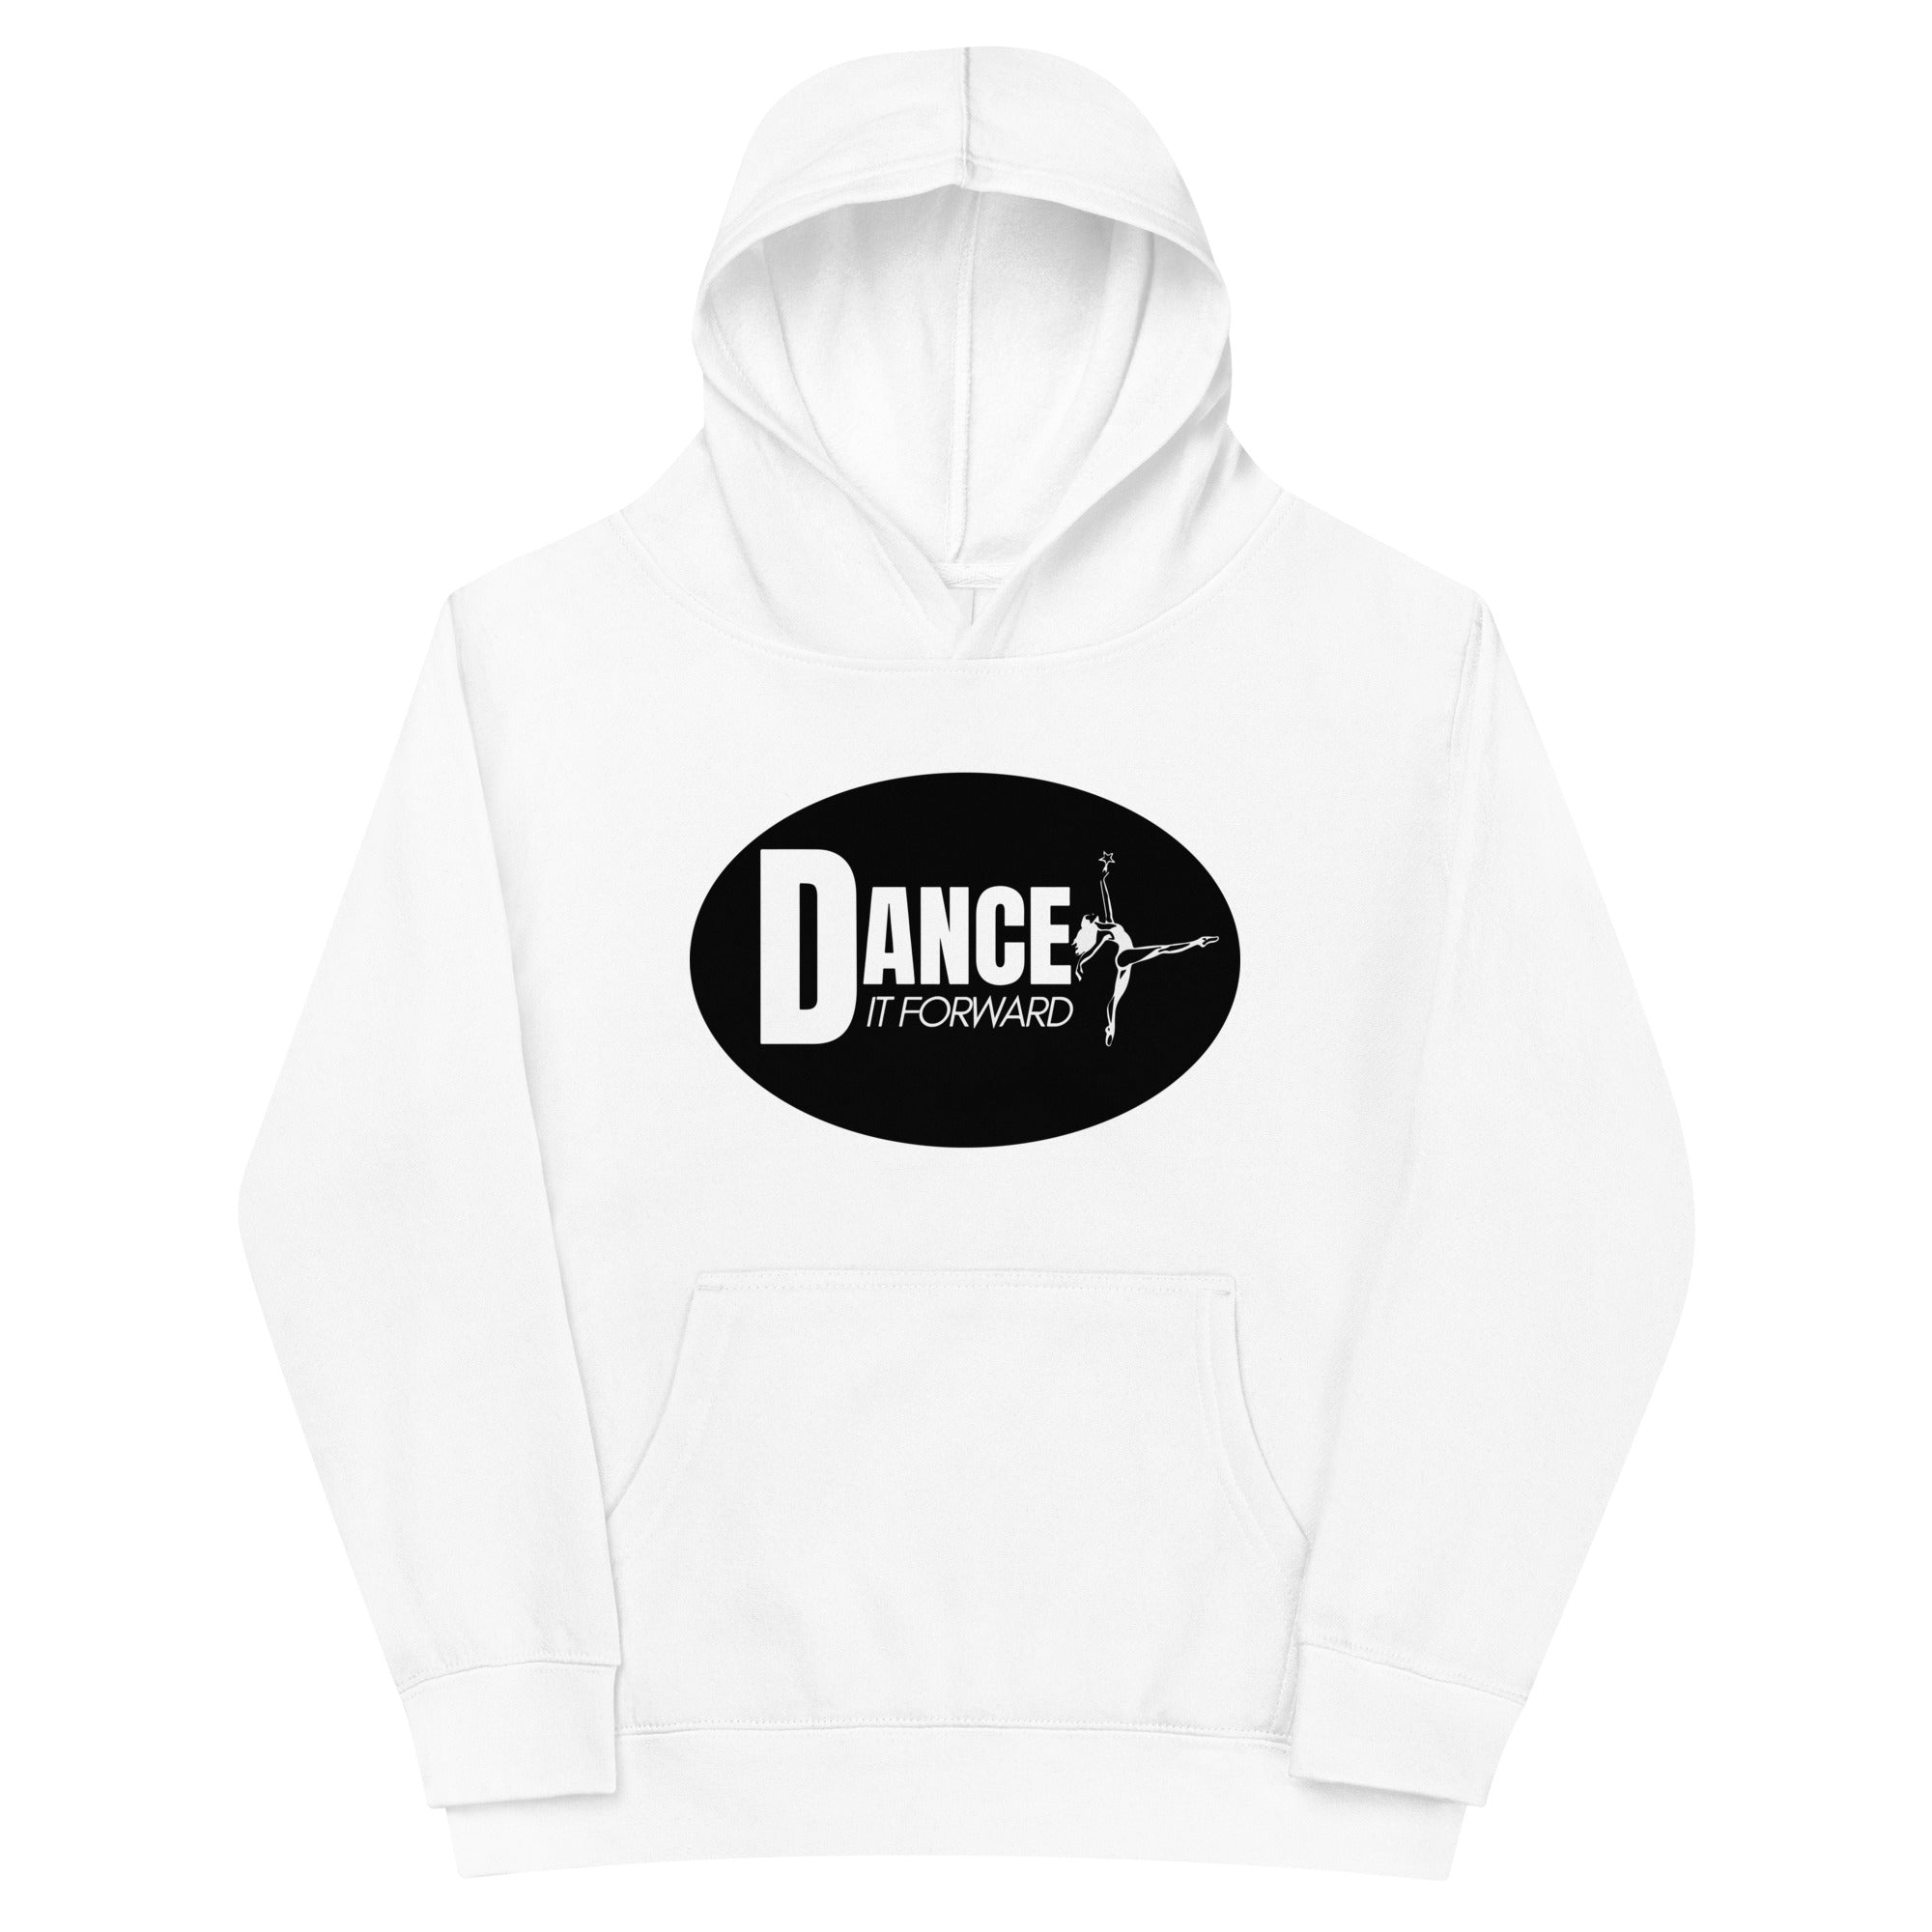 DIF/GYD Kids fleece hoodie (Dance it Forward)